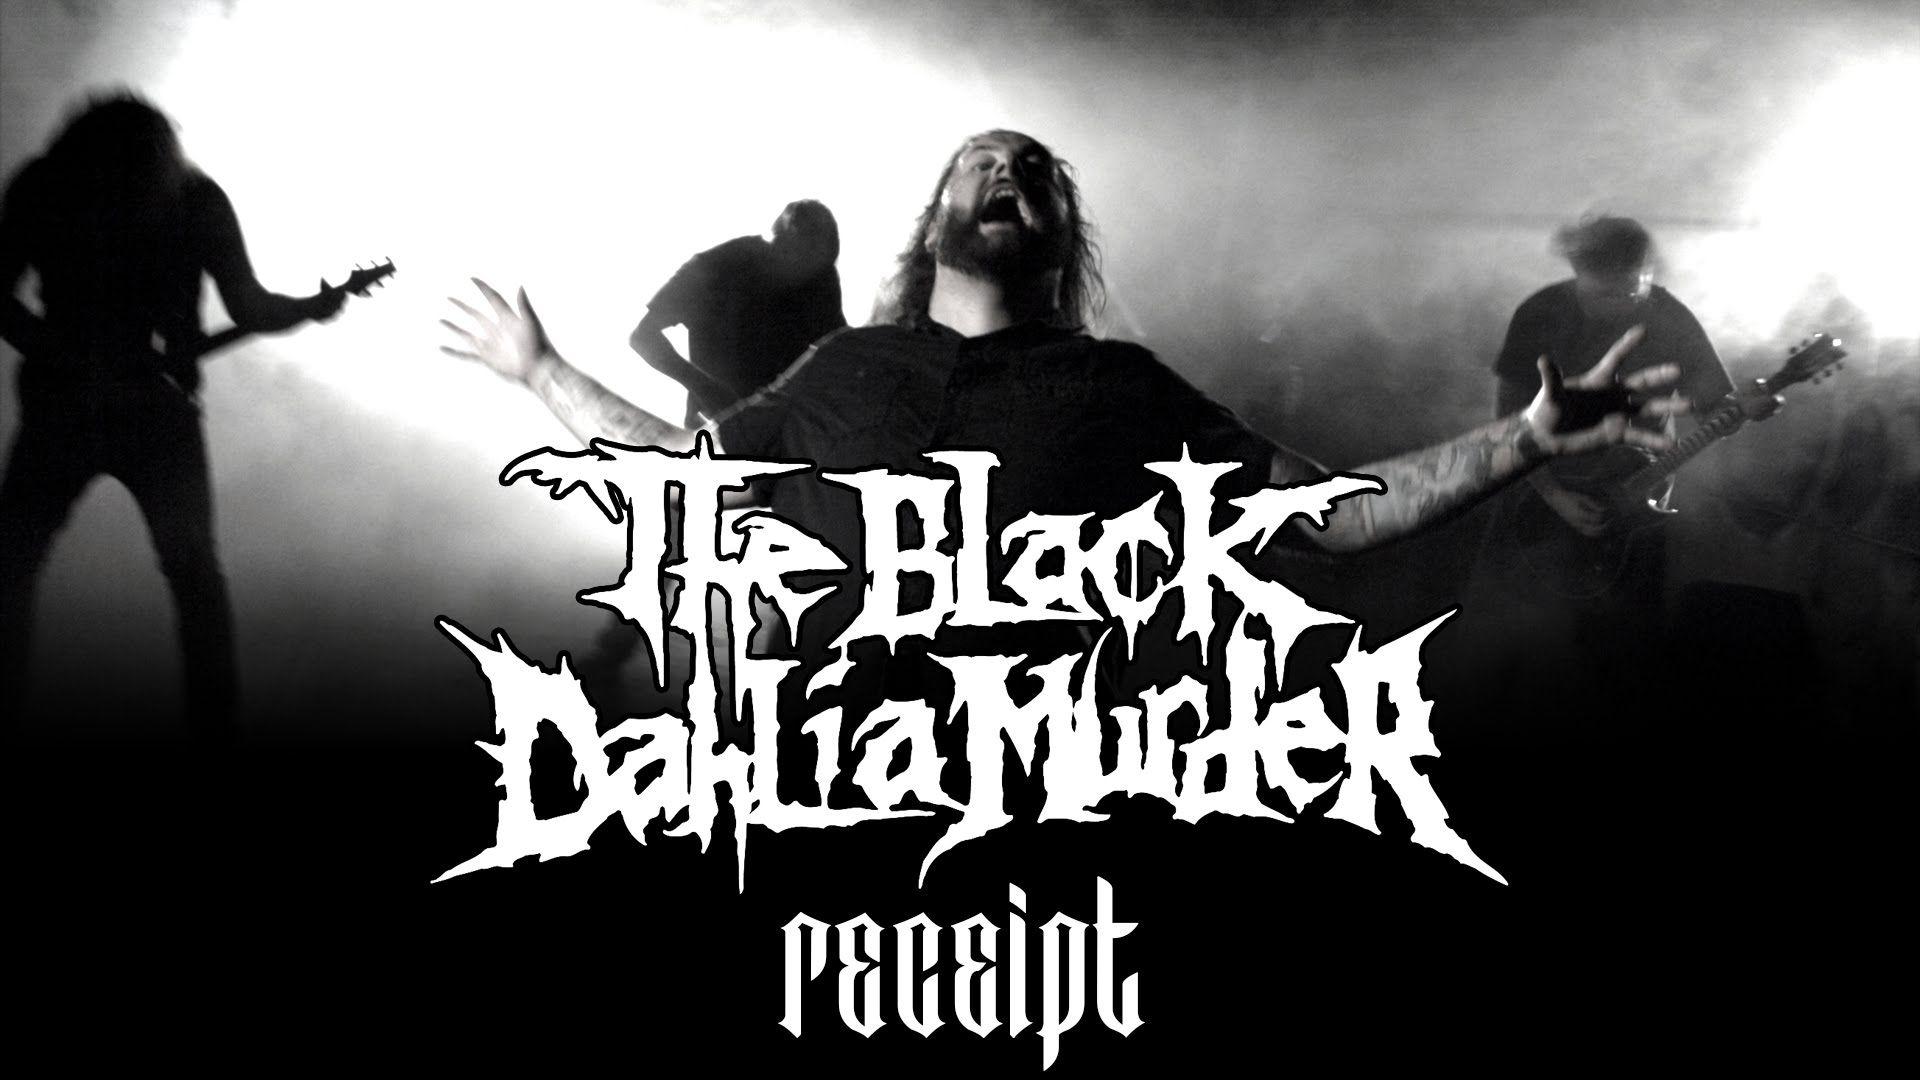 The Black Dahlia Murder announce headlining tour dates for spring